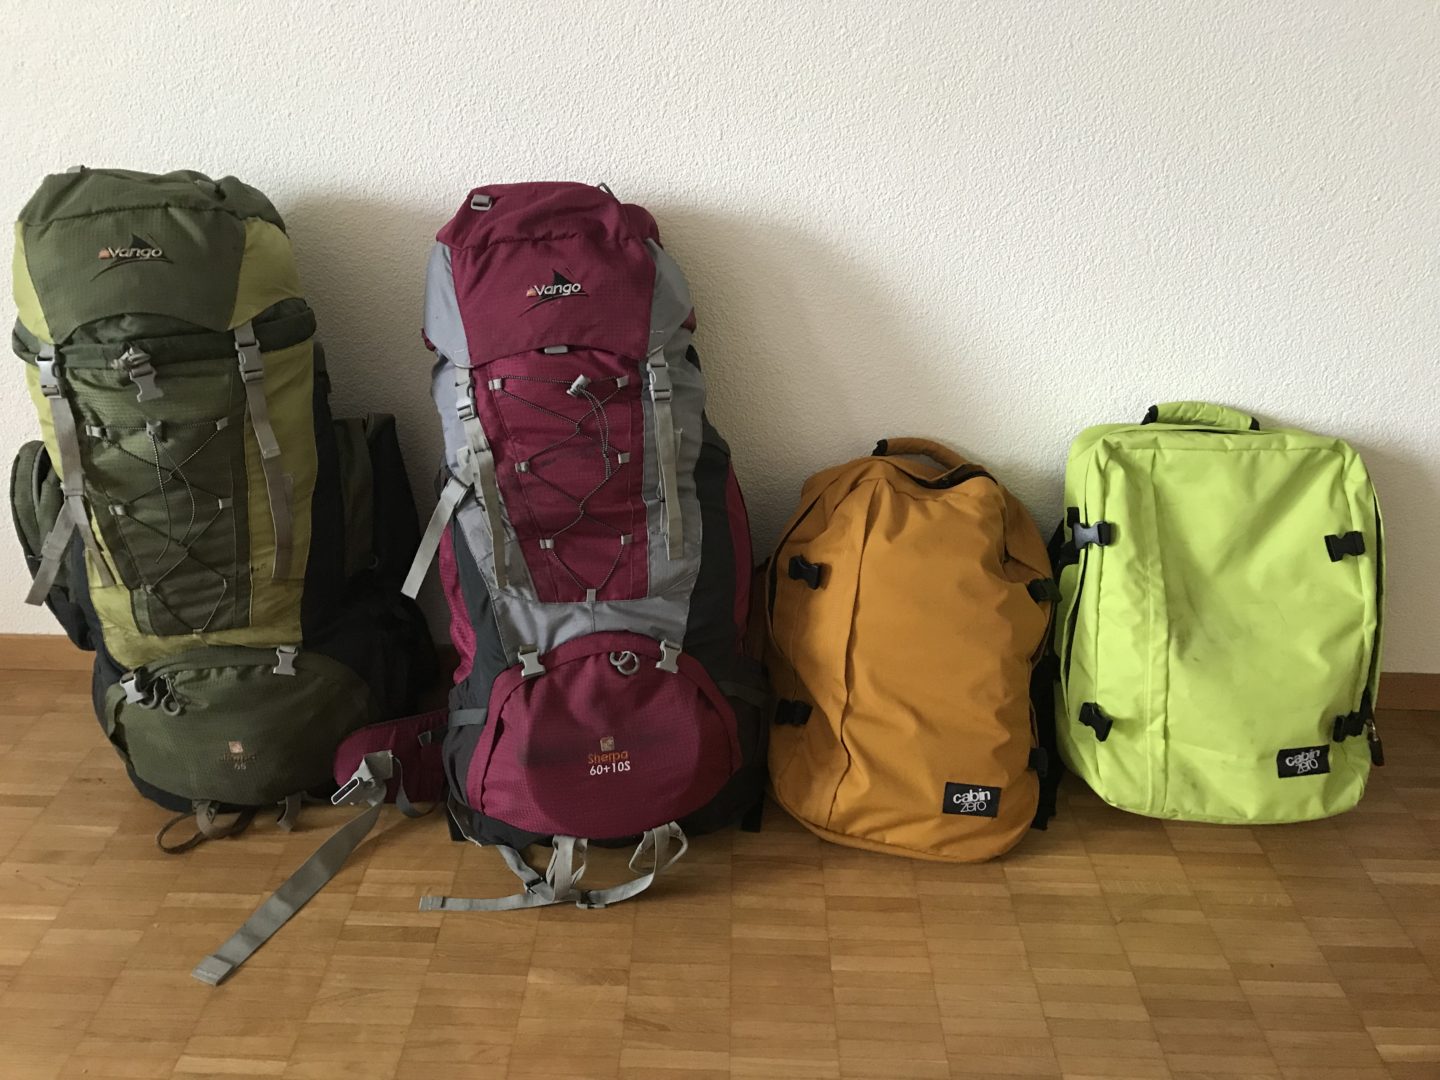 Luggage backpacks